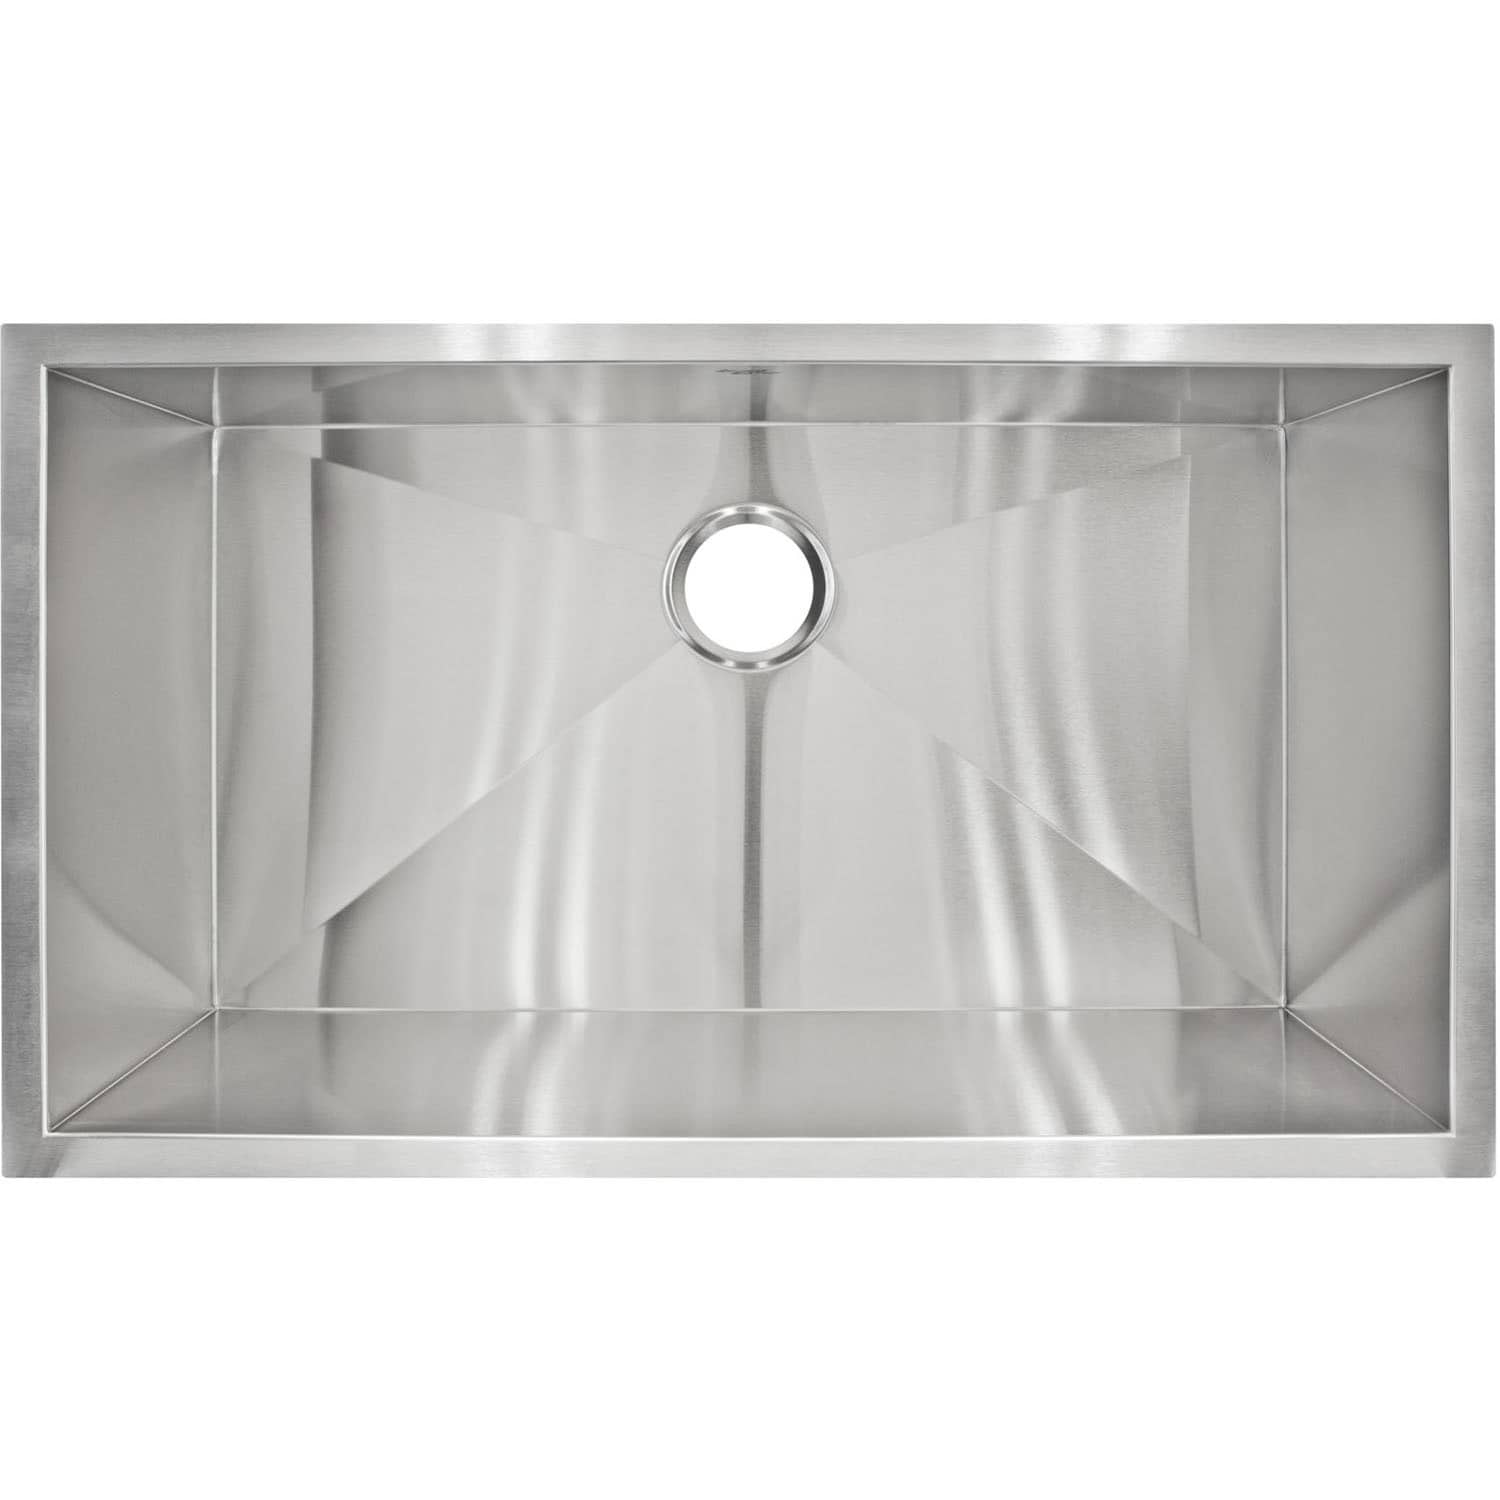 LessCare LP2 Designer Undermount Stainless Steel Sink Today $279.99